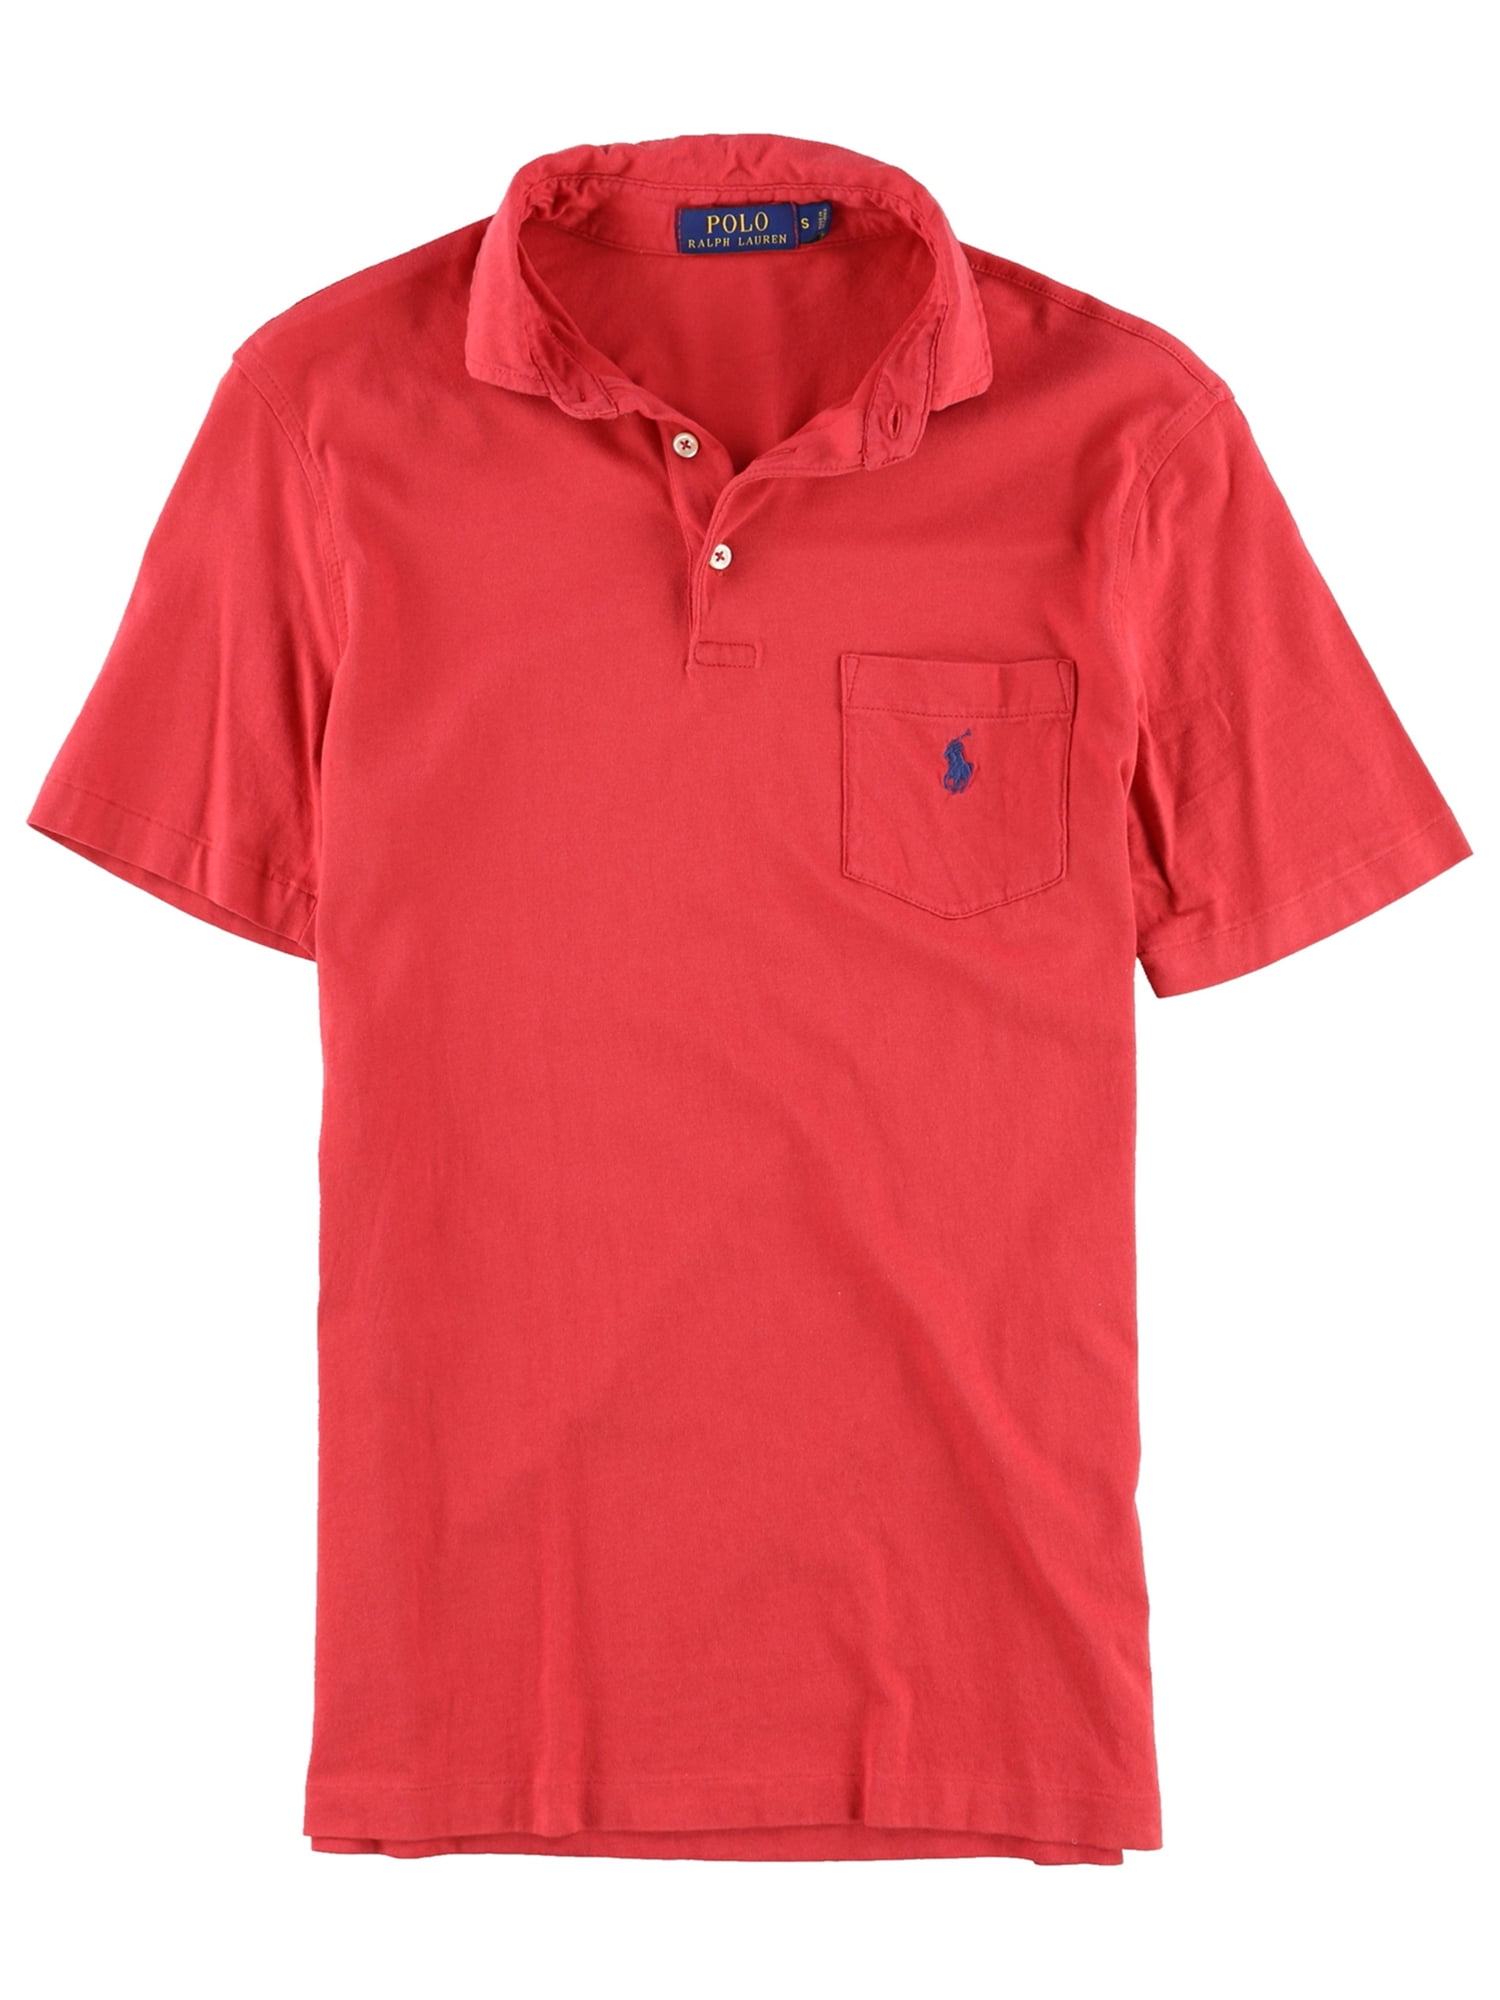 jeugd Ale Afgrond Ralph Lauren Mens Pocket Rugby Polo Shirt, Red, X-Large - Walmart.com